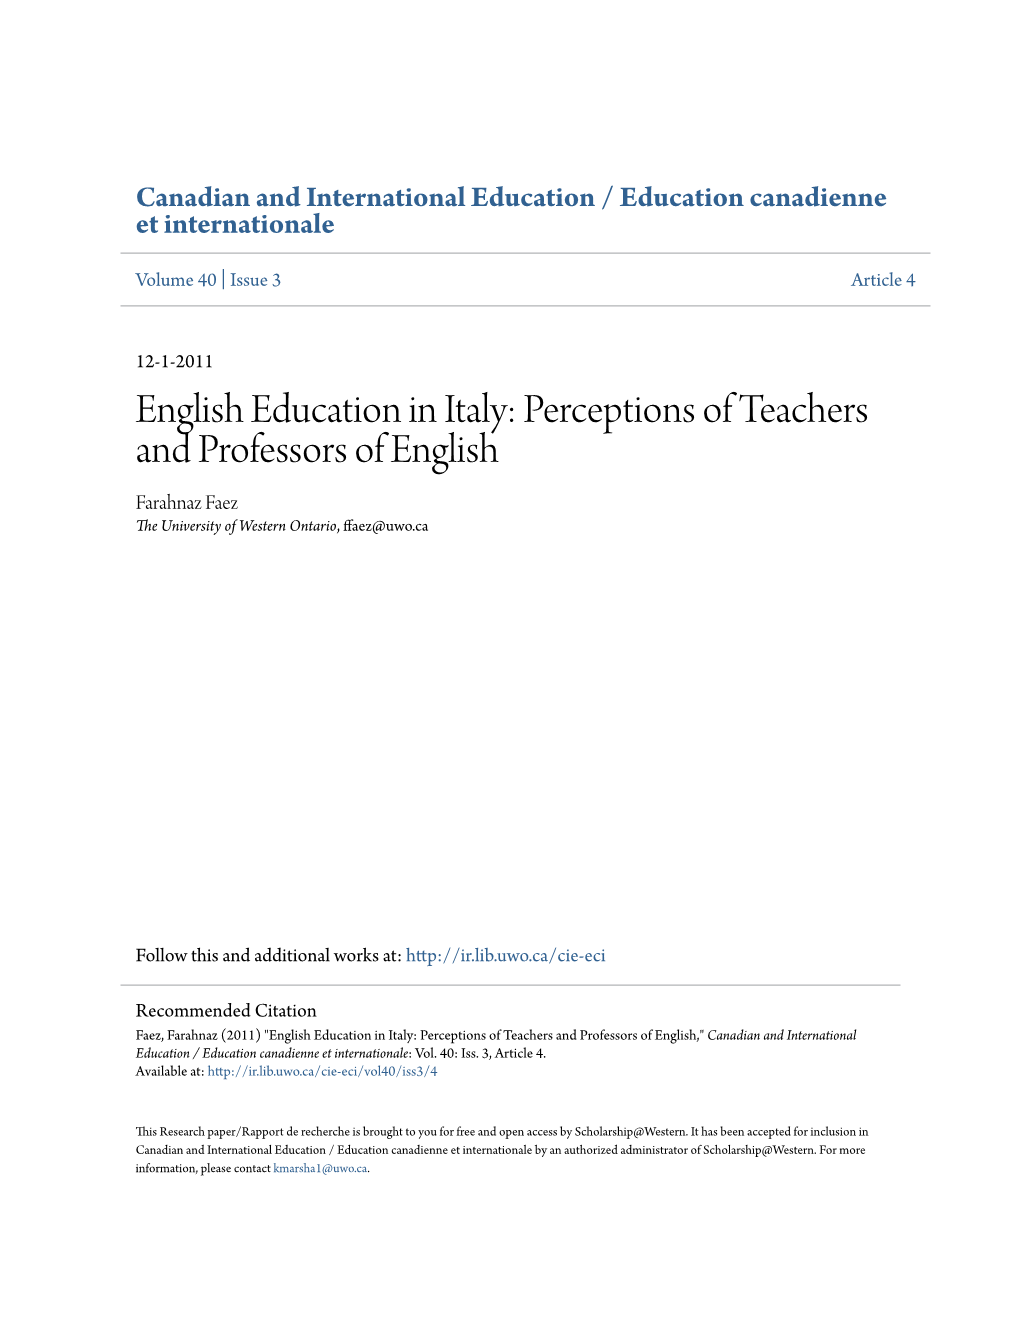 English Education in Italy: Perceptions of Teachers and Professors of English Farahnaz Faez the University of Western Ontario, Ffaez@Uwo.Ca